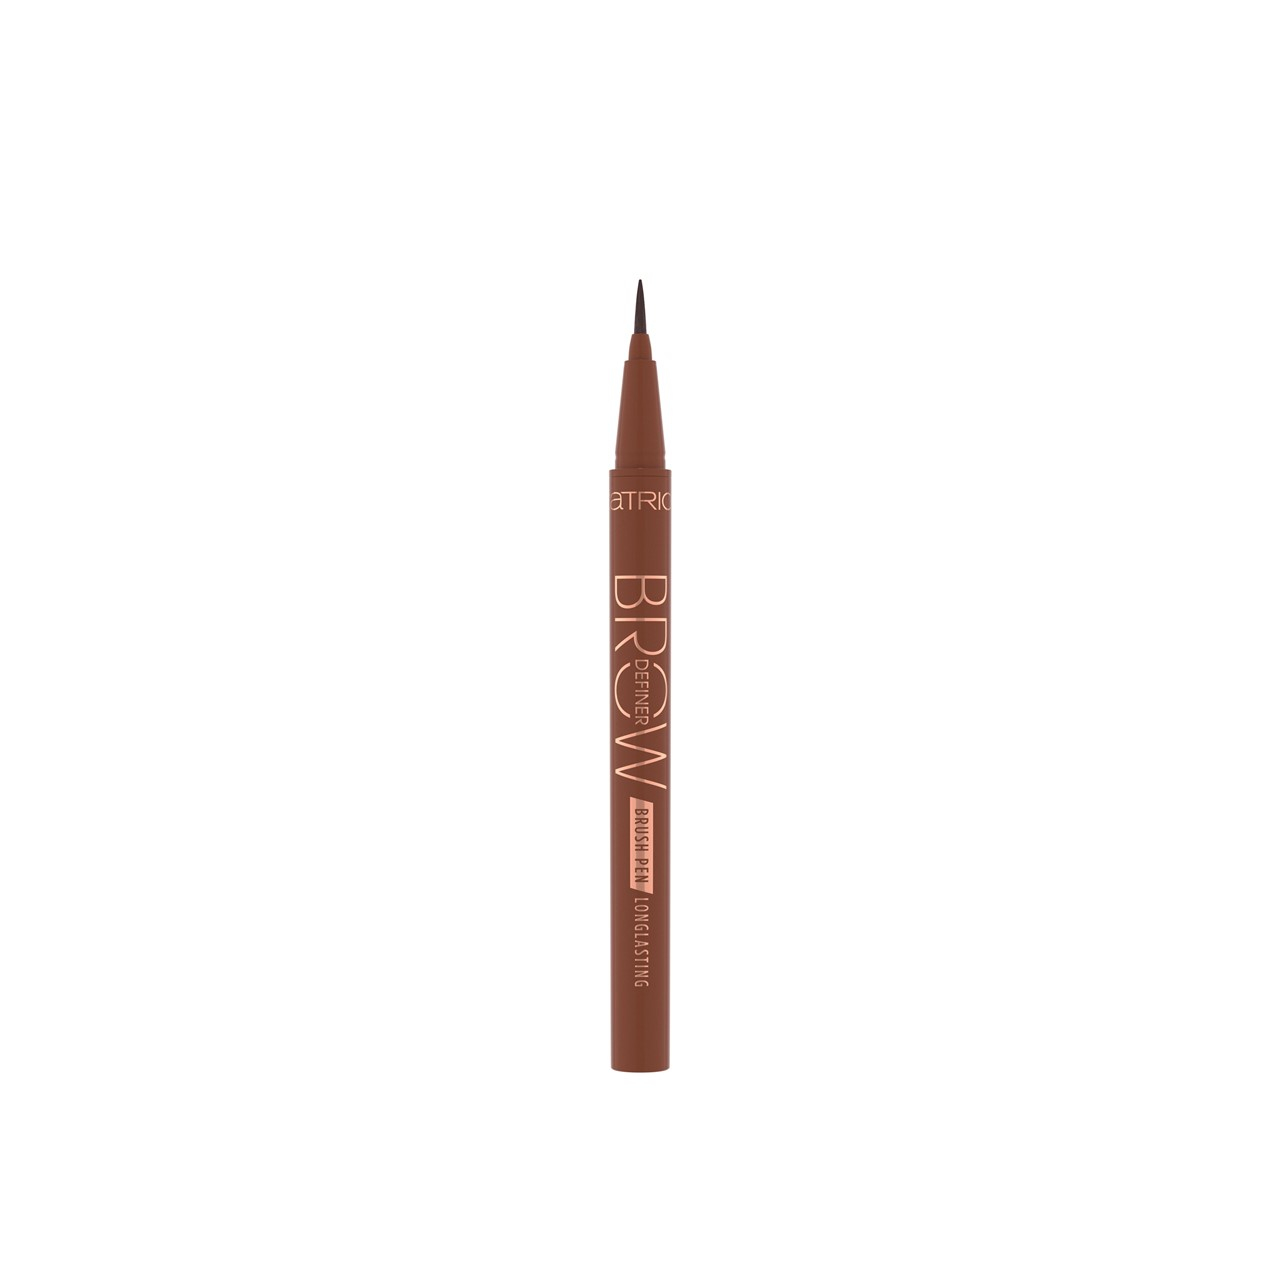 Catrice Brow Definer Brush Pen Longlasting 020 Medium Brown 0.7ml (0.02fl oz)